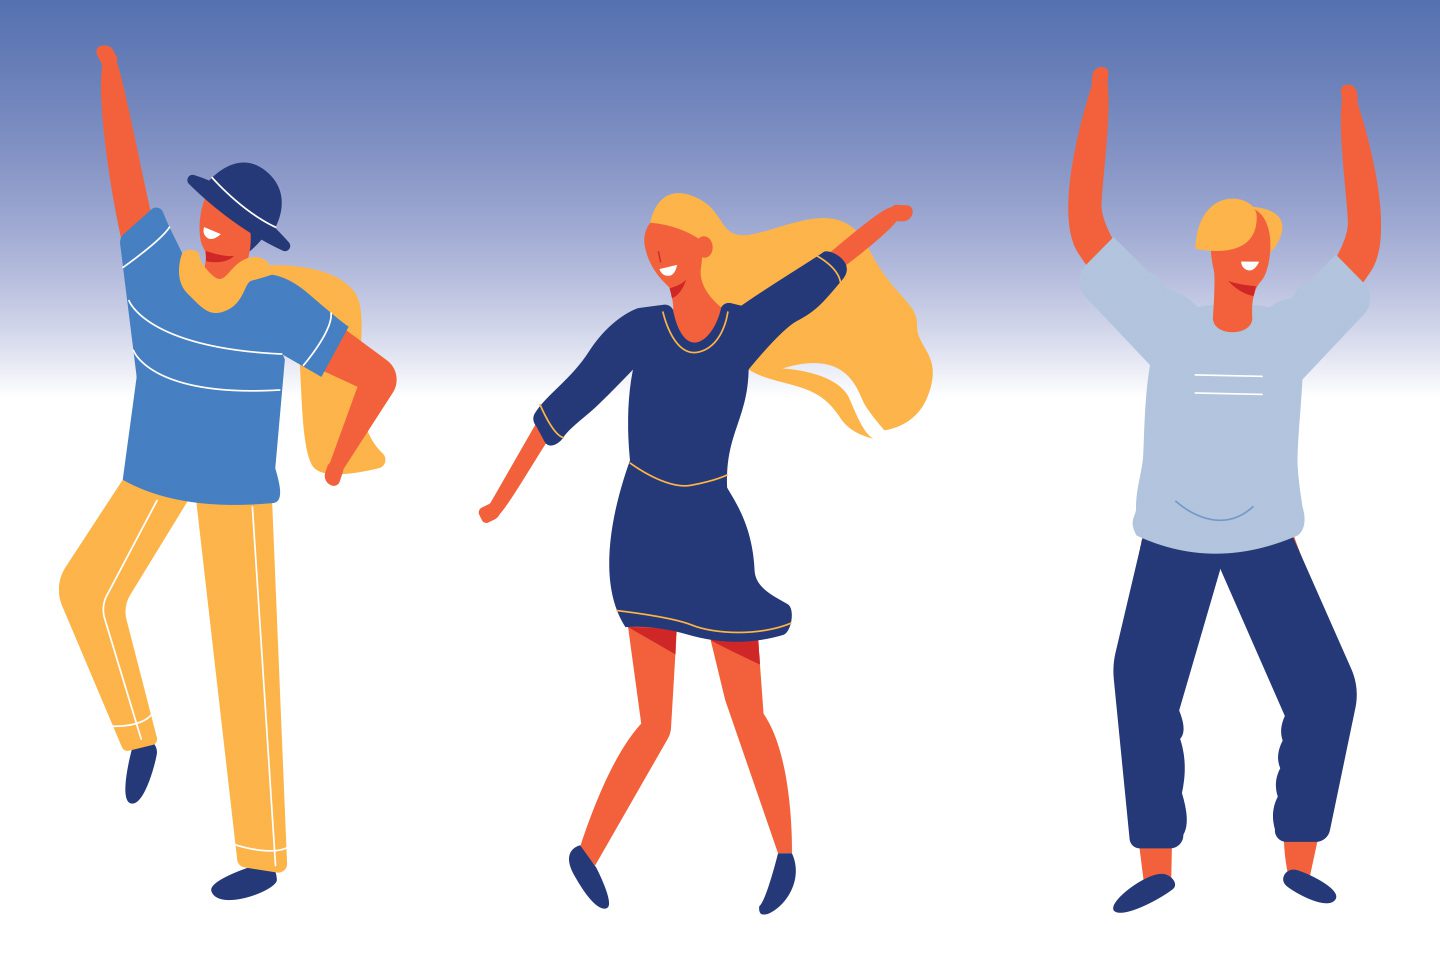 Illustrations of happy healthy people dancing